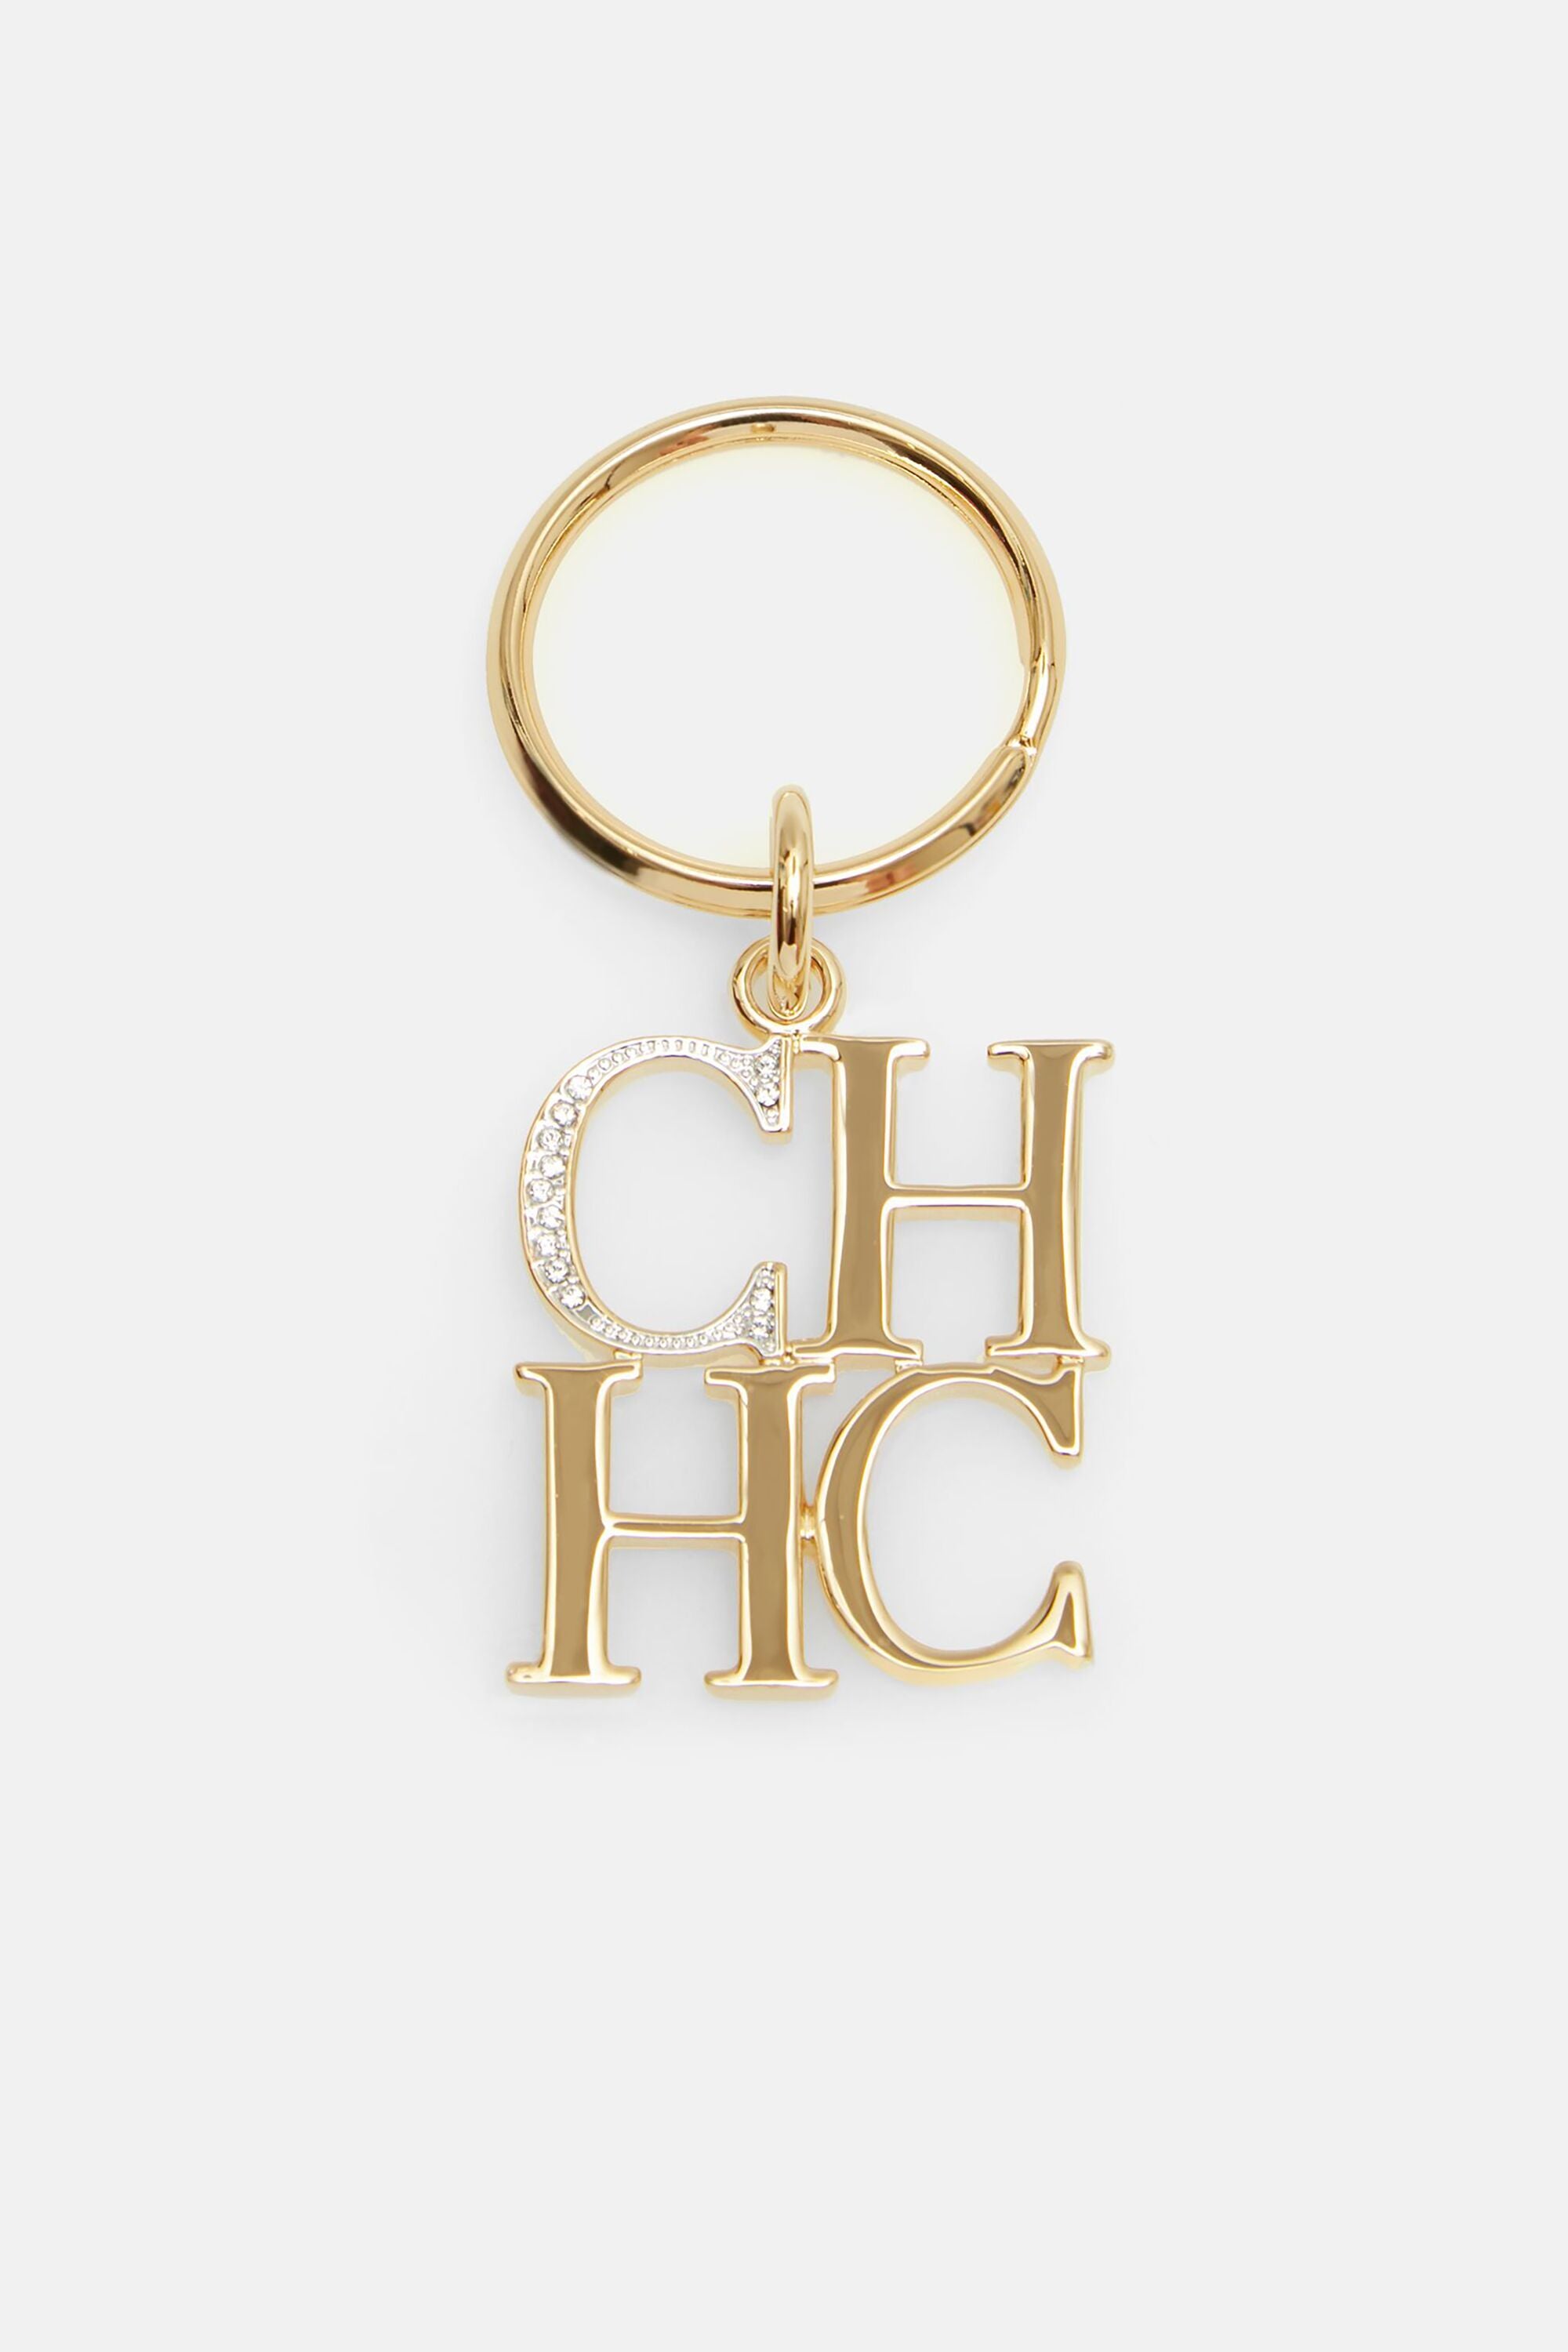 CH Love  Keychain gold/red - CH Carolina Herrera United States